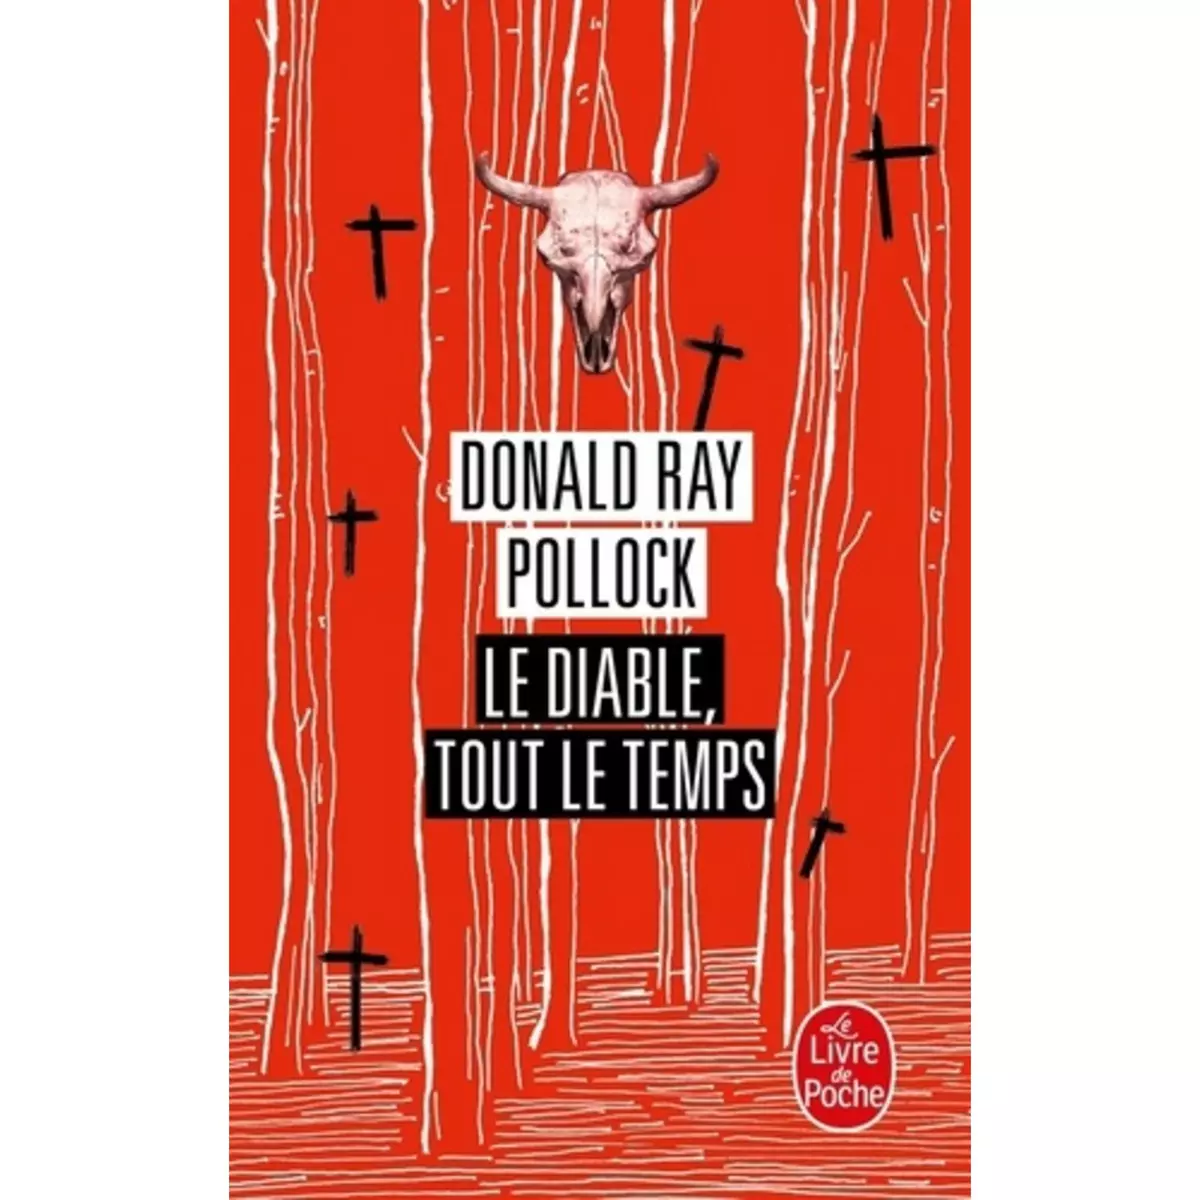  LE DIABLE, TOUT LE TEMPS, Pollock Donald Ray